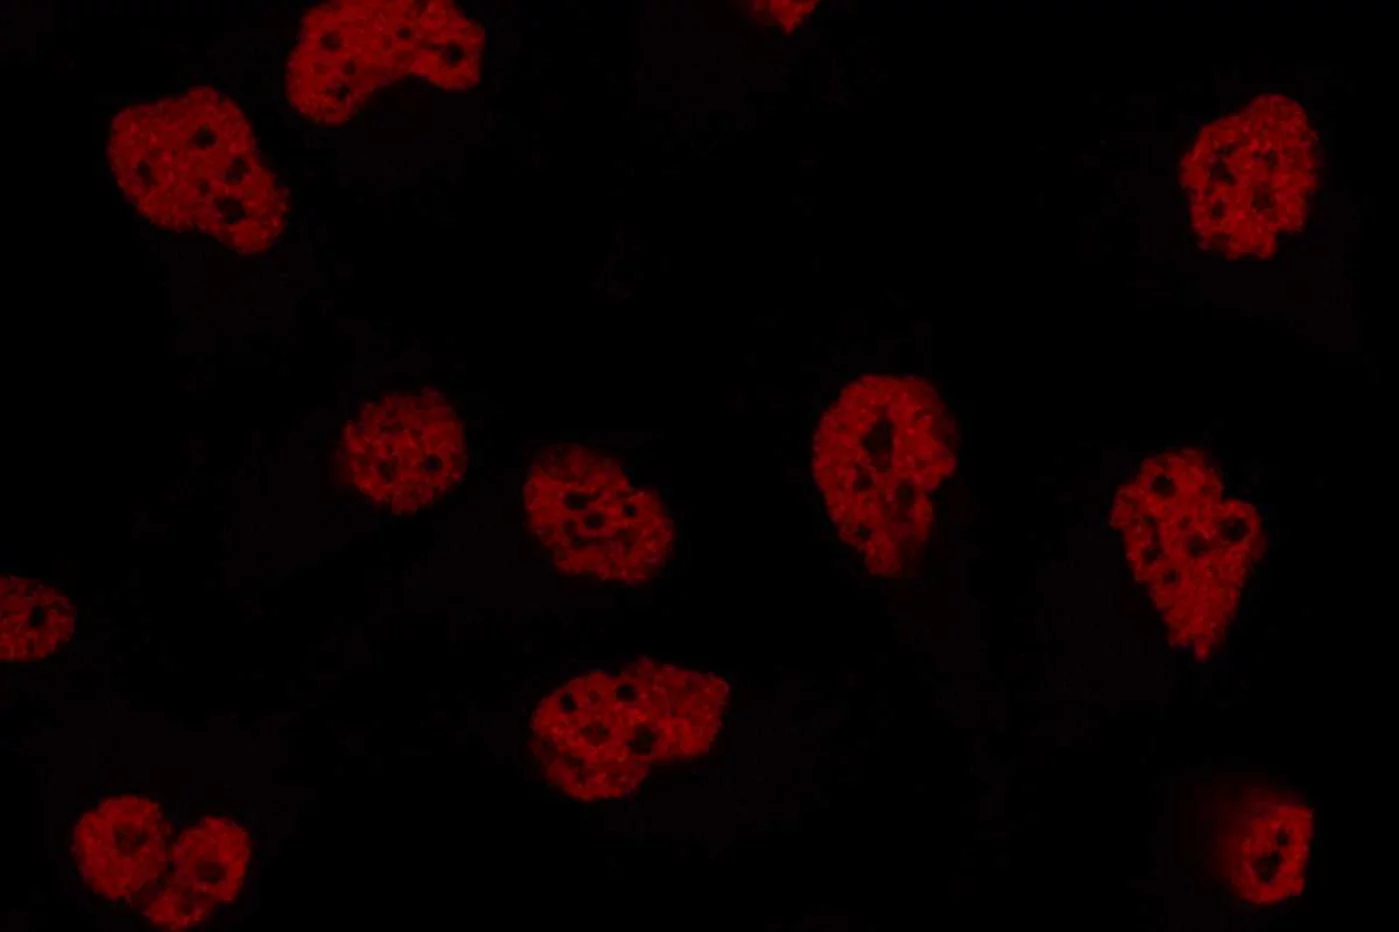 Tinción nuclear de células de cáncer de mama triple negativo. Imagen: LAURA PASCUAL/CRG.